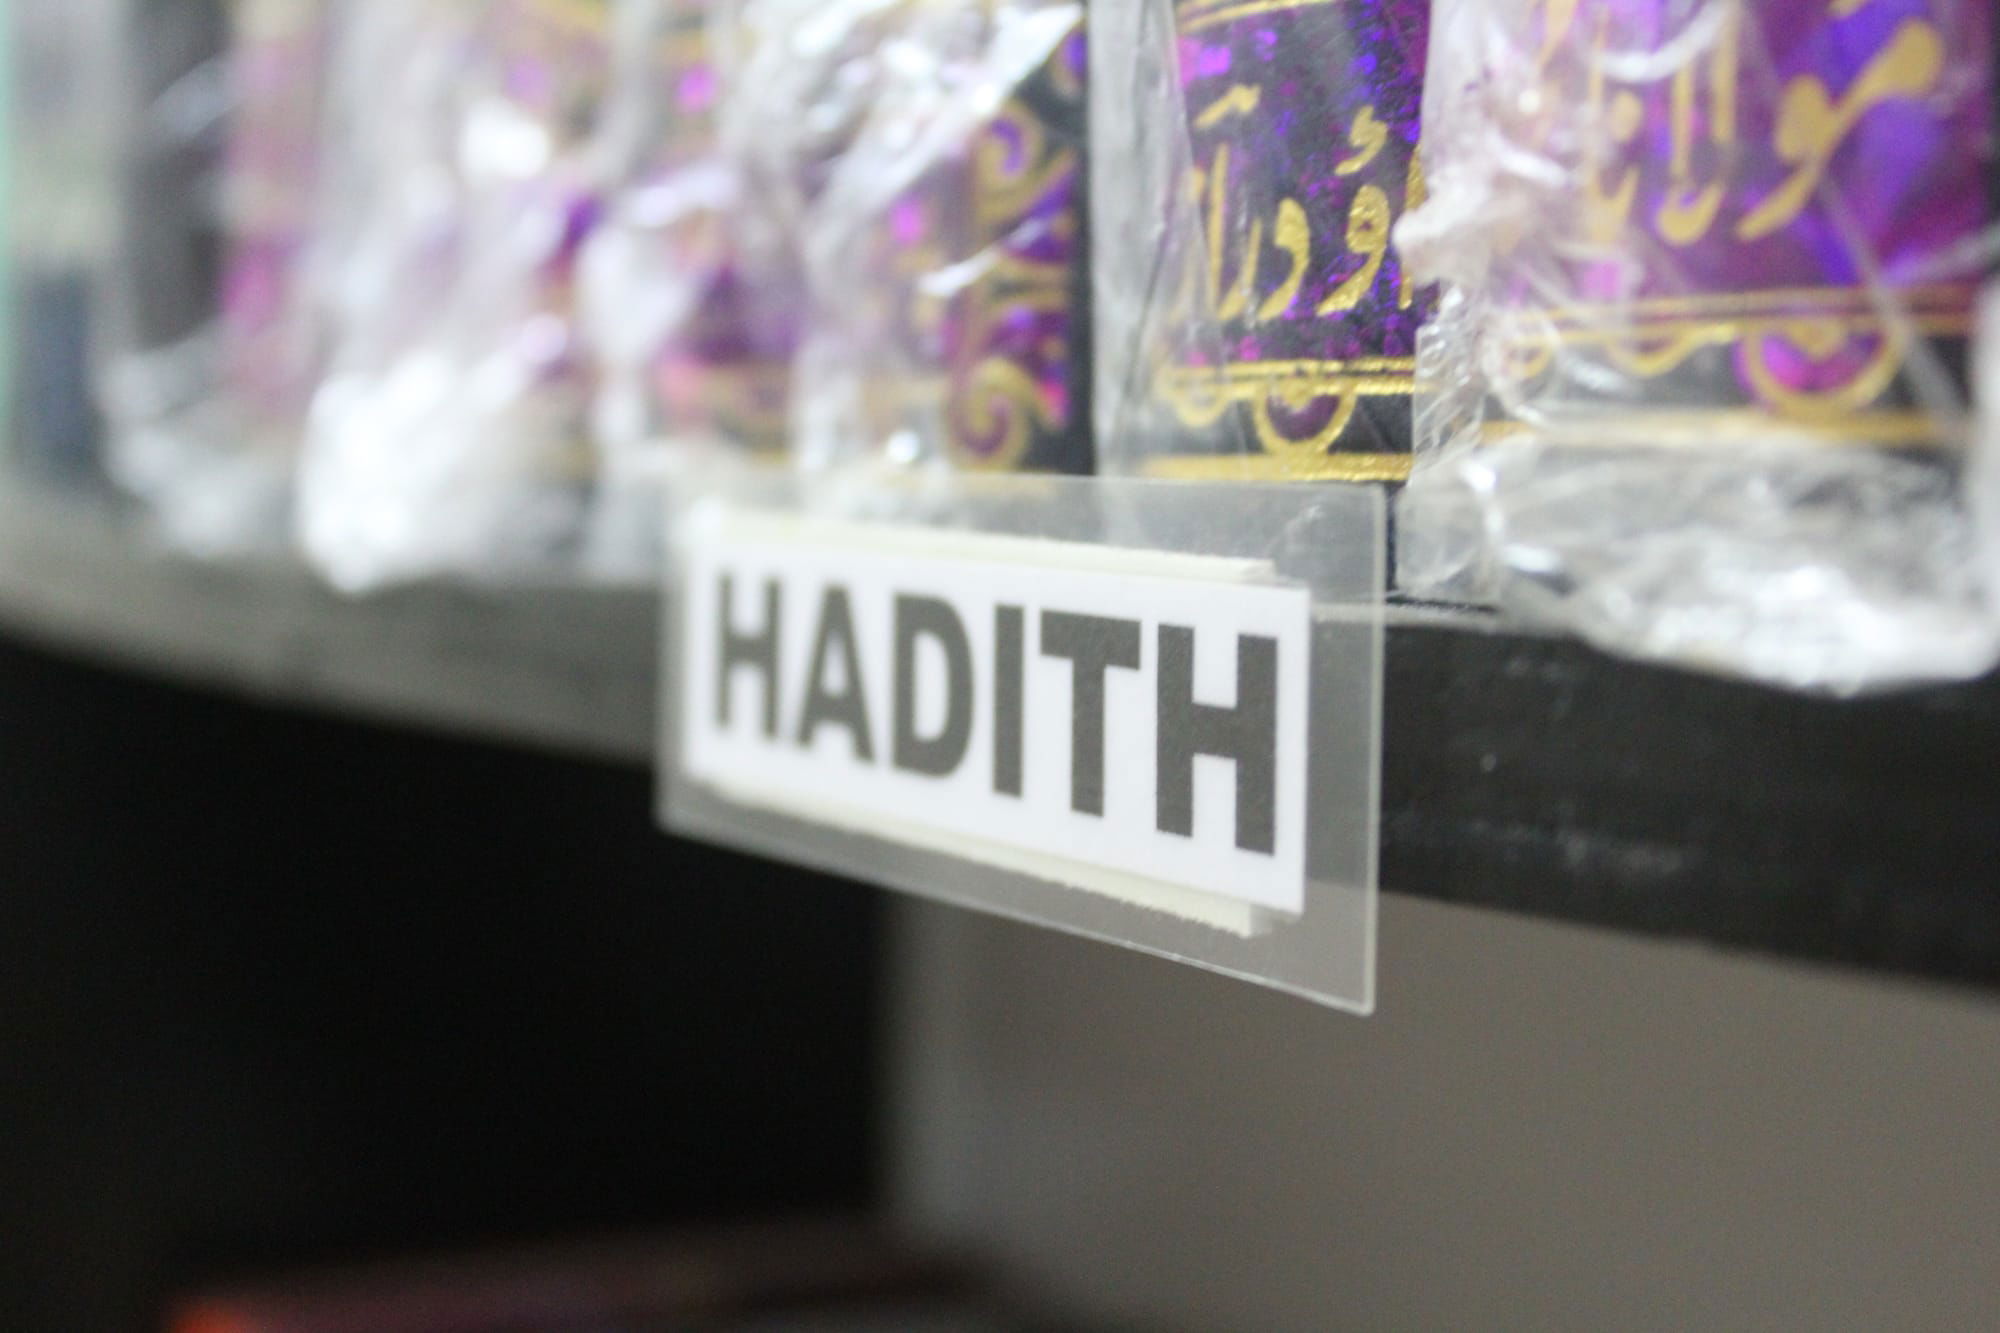 Hadith section